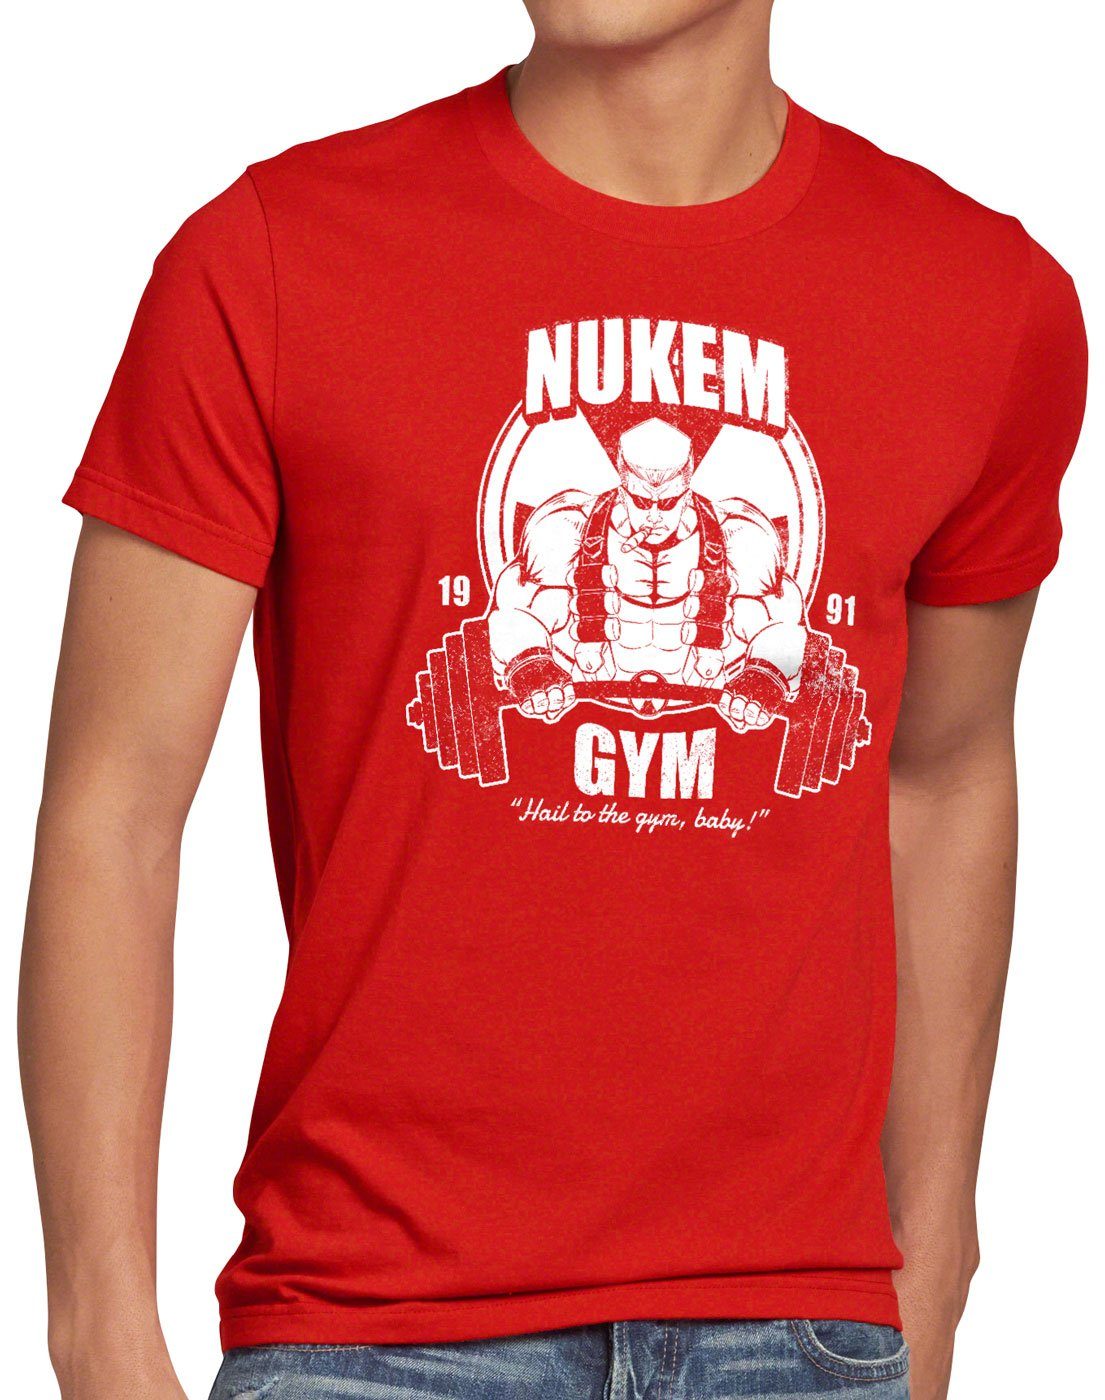 Print-Shirt shooter Gym baby dos Nuke doom rot ego style3 T-Shirt Herren